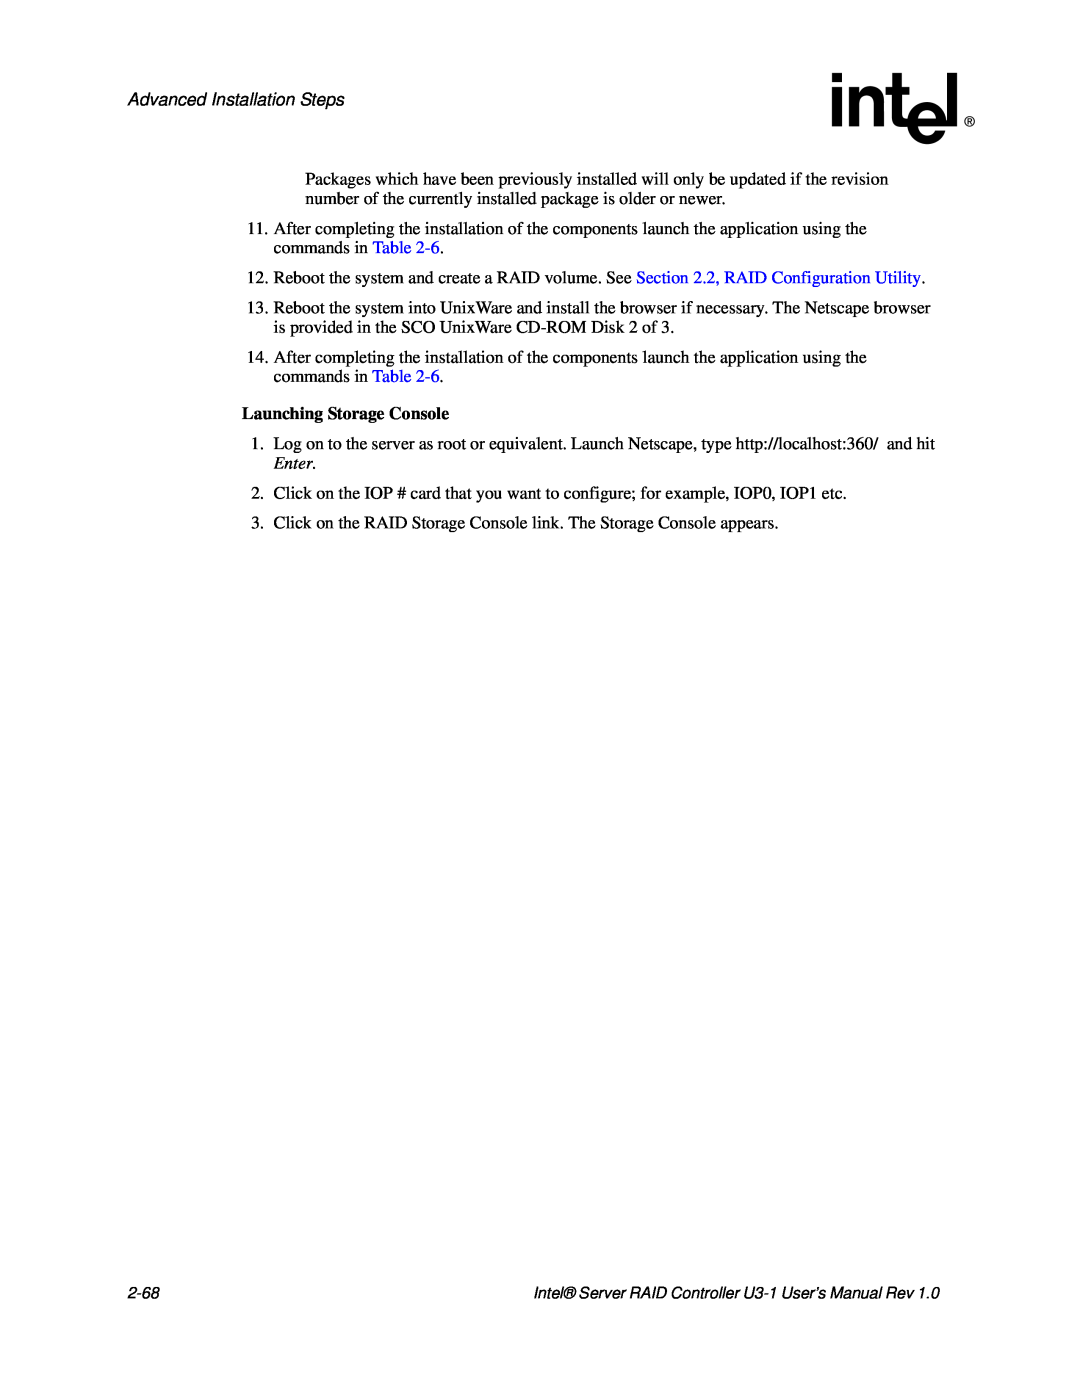 Intel SRCU31 user manual Advanced Installation Steps, Launching Storage Console, 2-68 